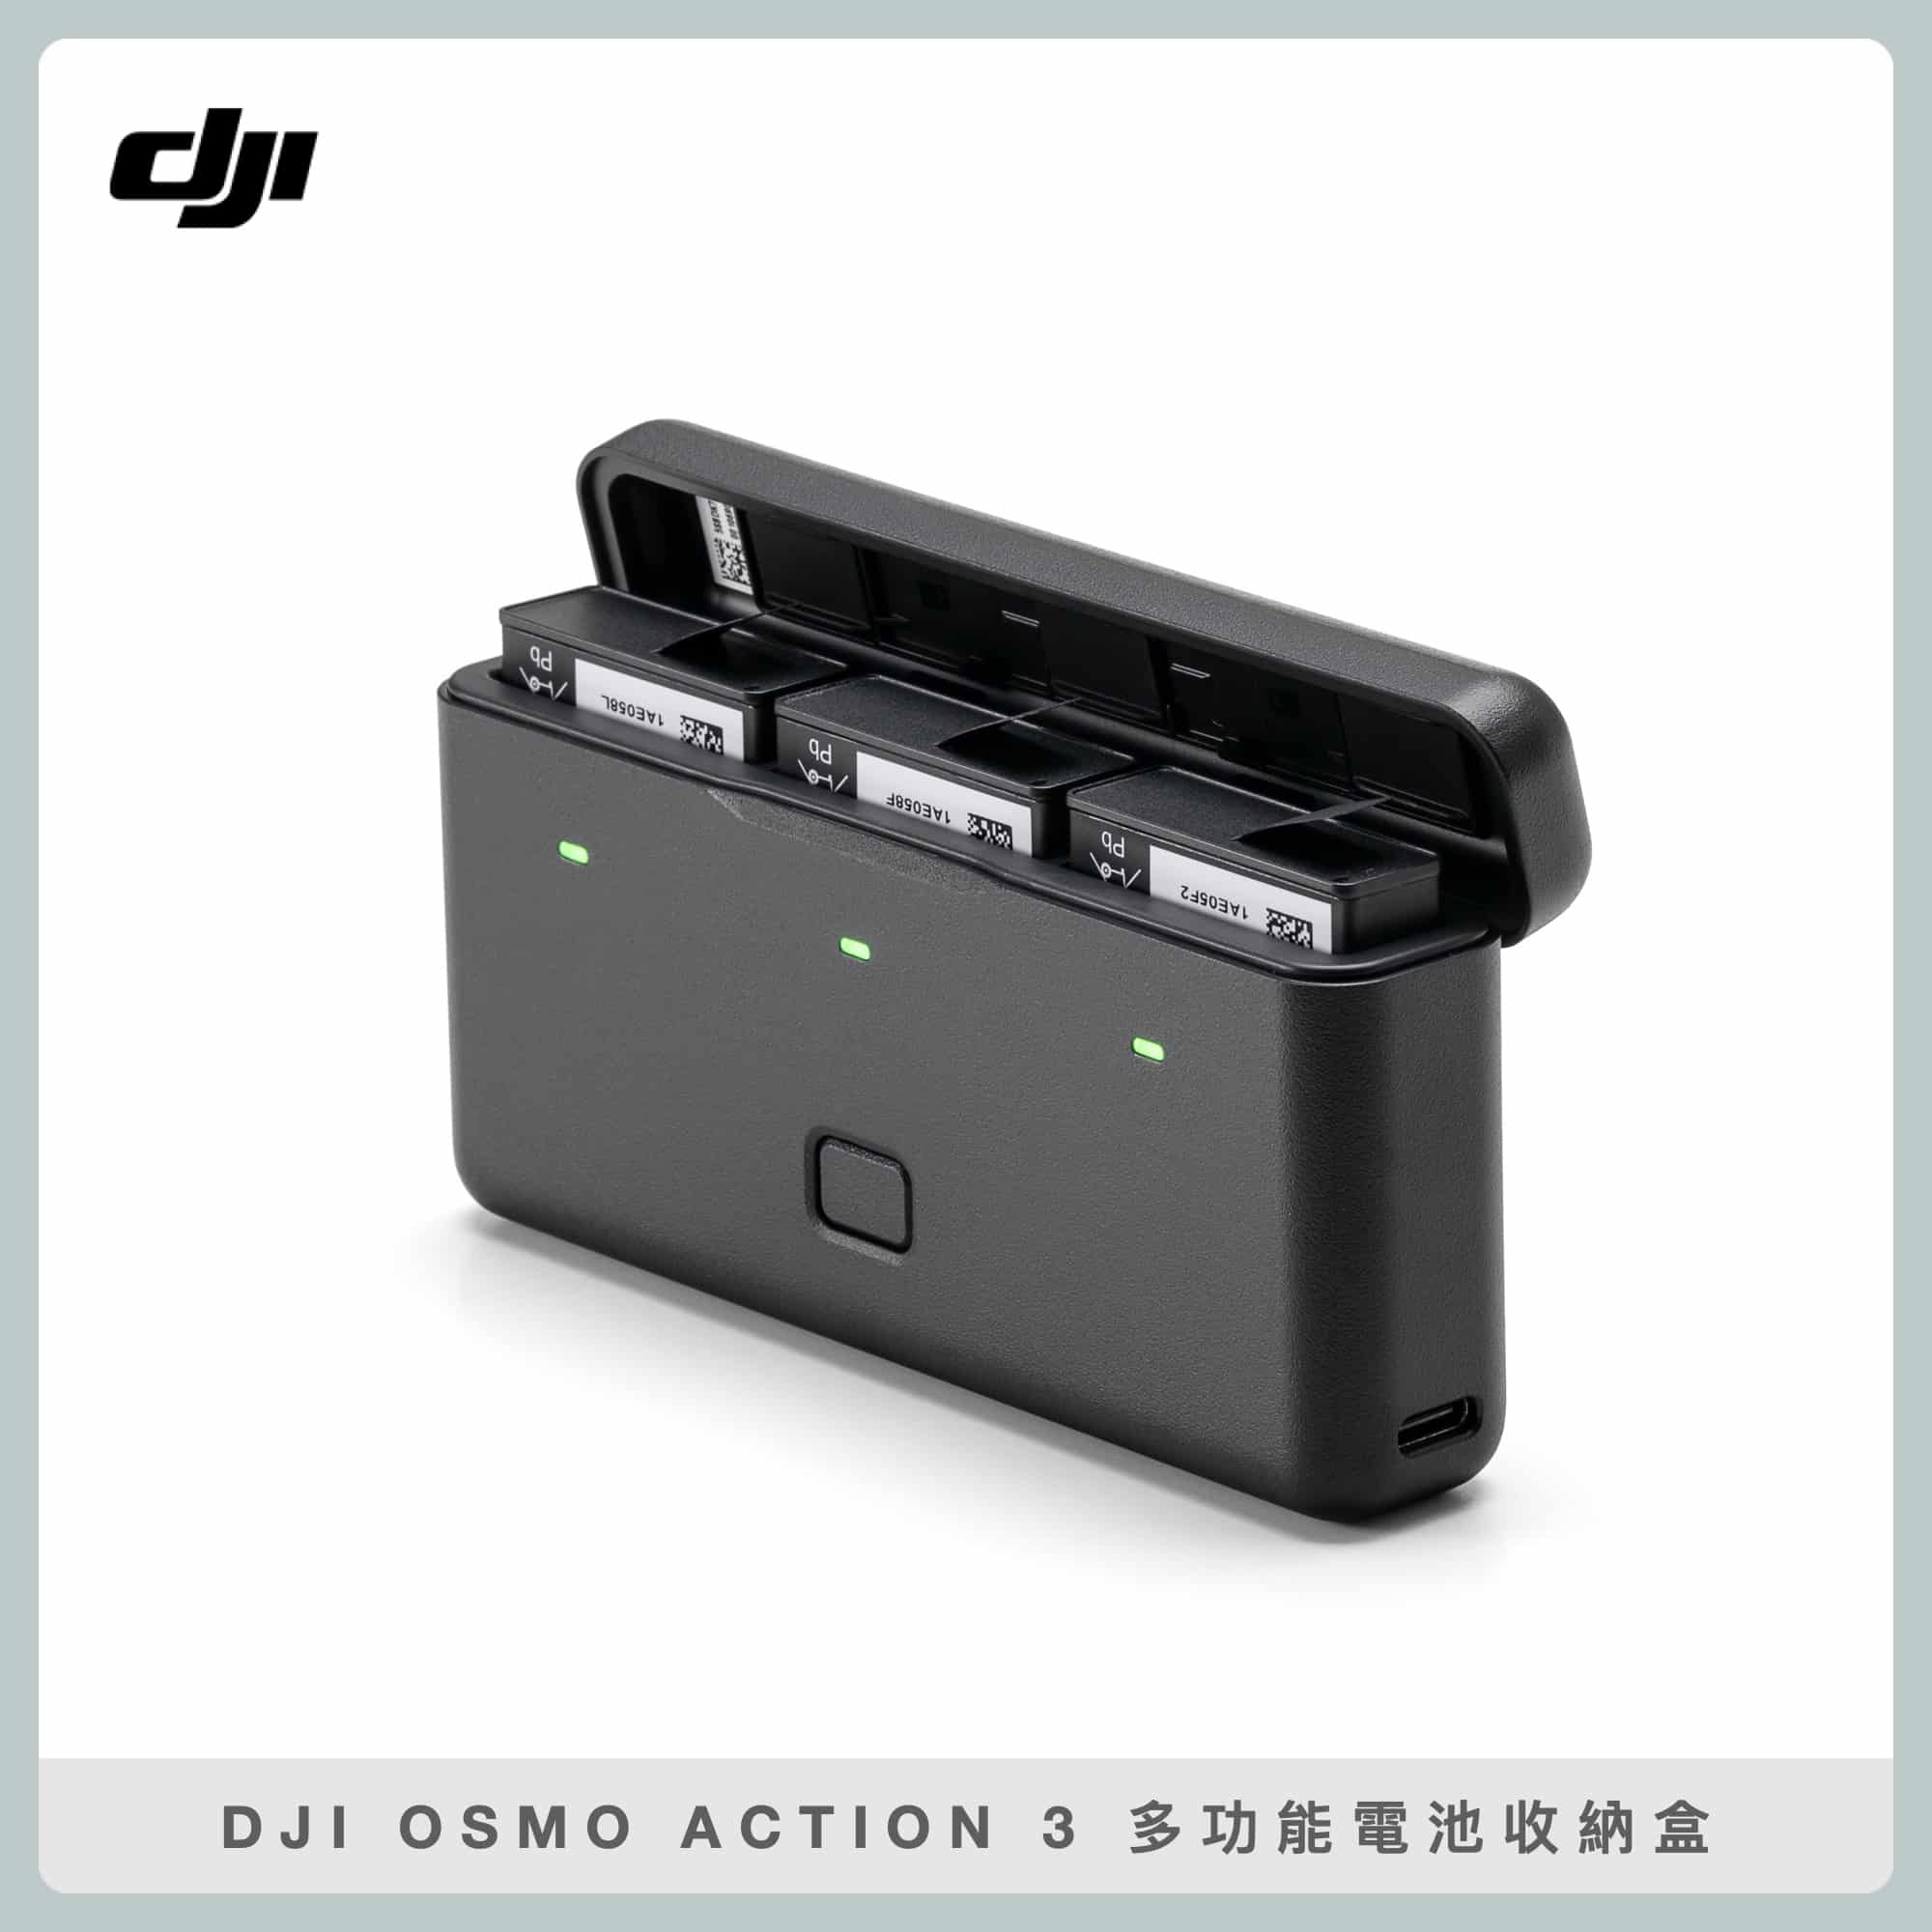 DJI OSMO ACTION 3 多功能電池收納盒(公司貨) | 法雅客網路商店